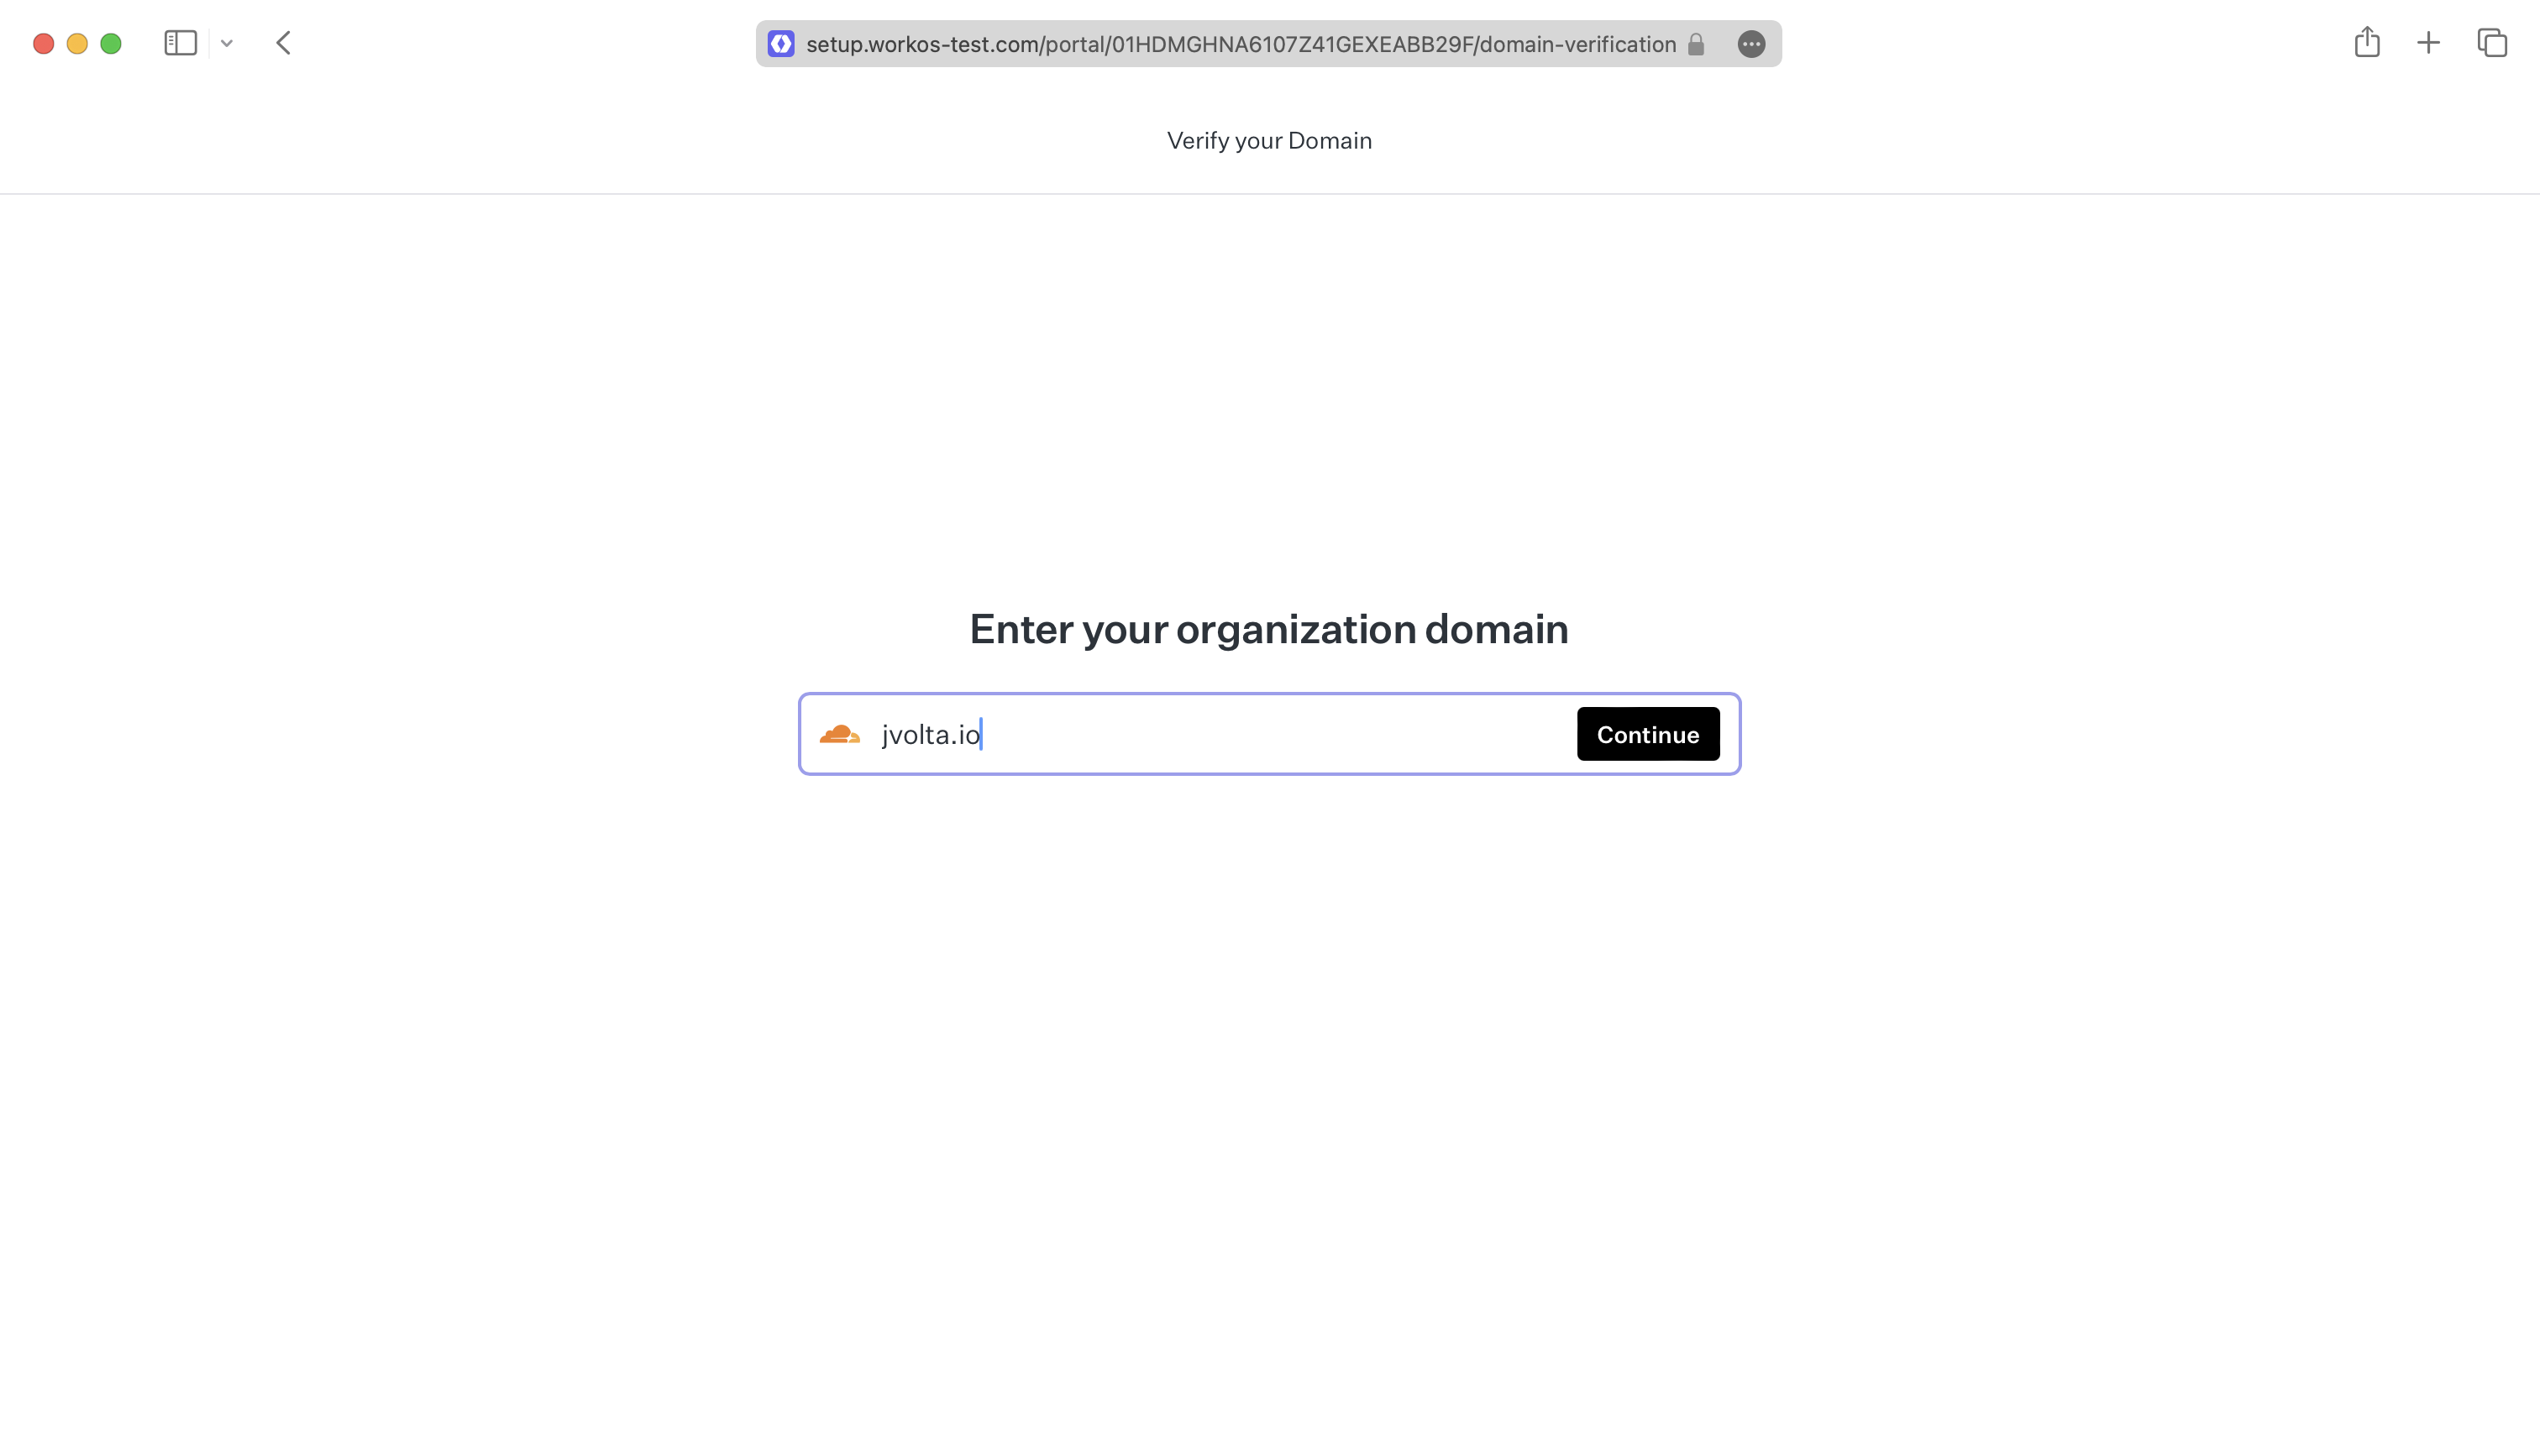 A screenshot show the Admin portal domain entry form.